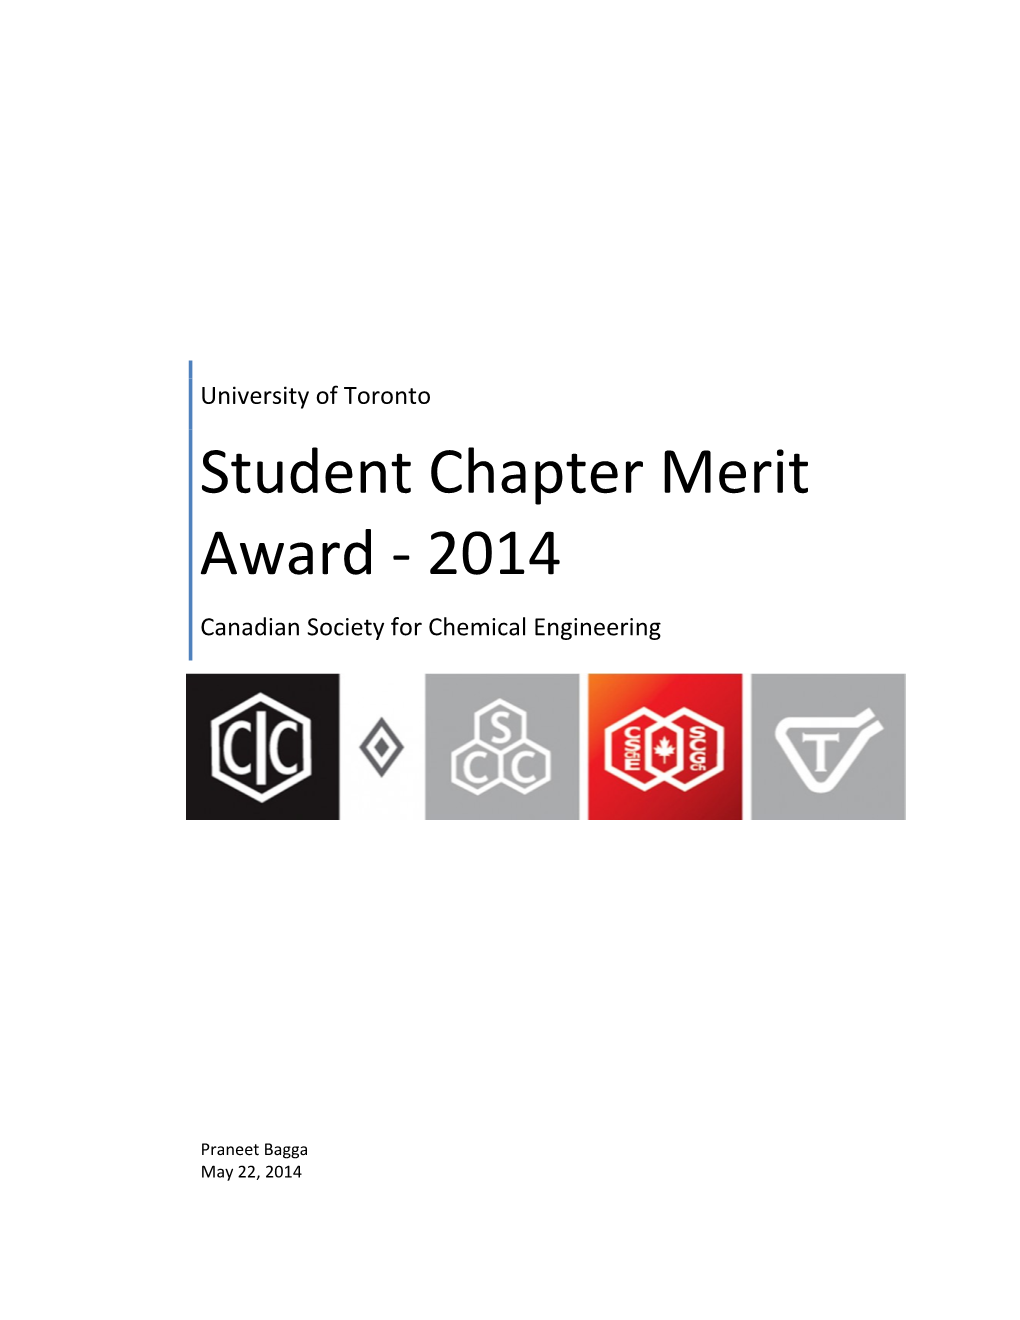 University of Toronto Student Chapter Merit Award - 2014